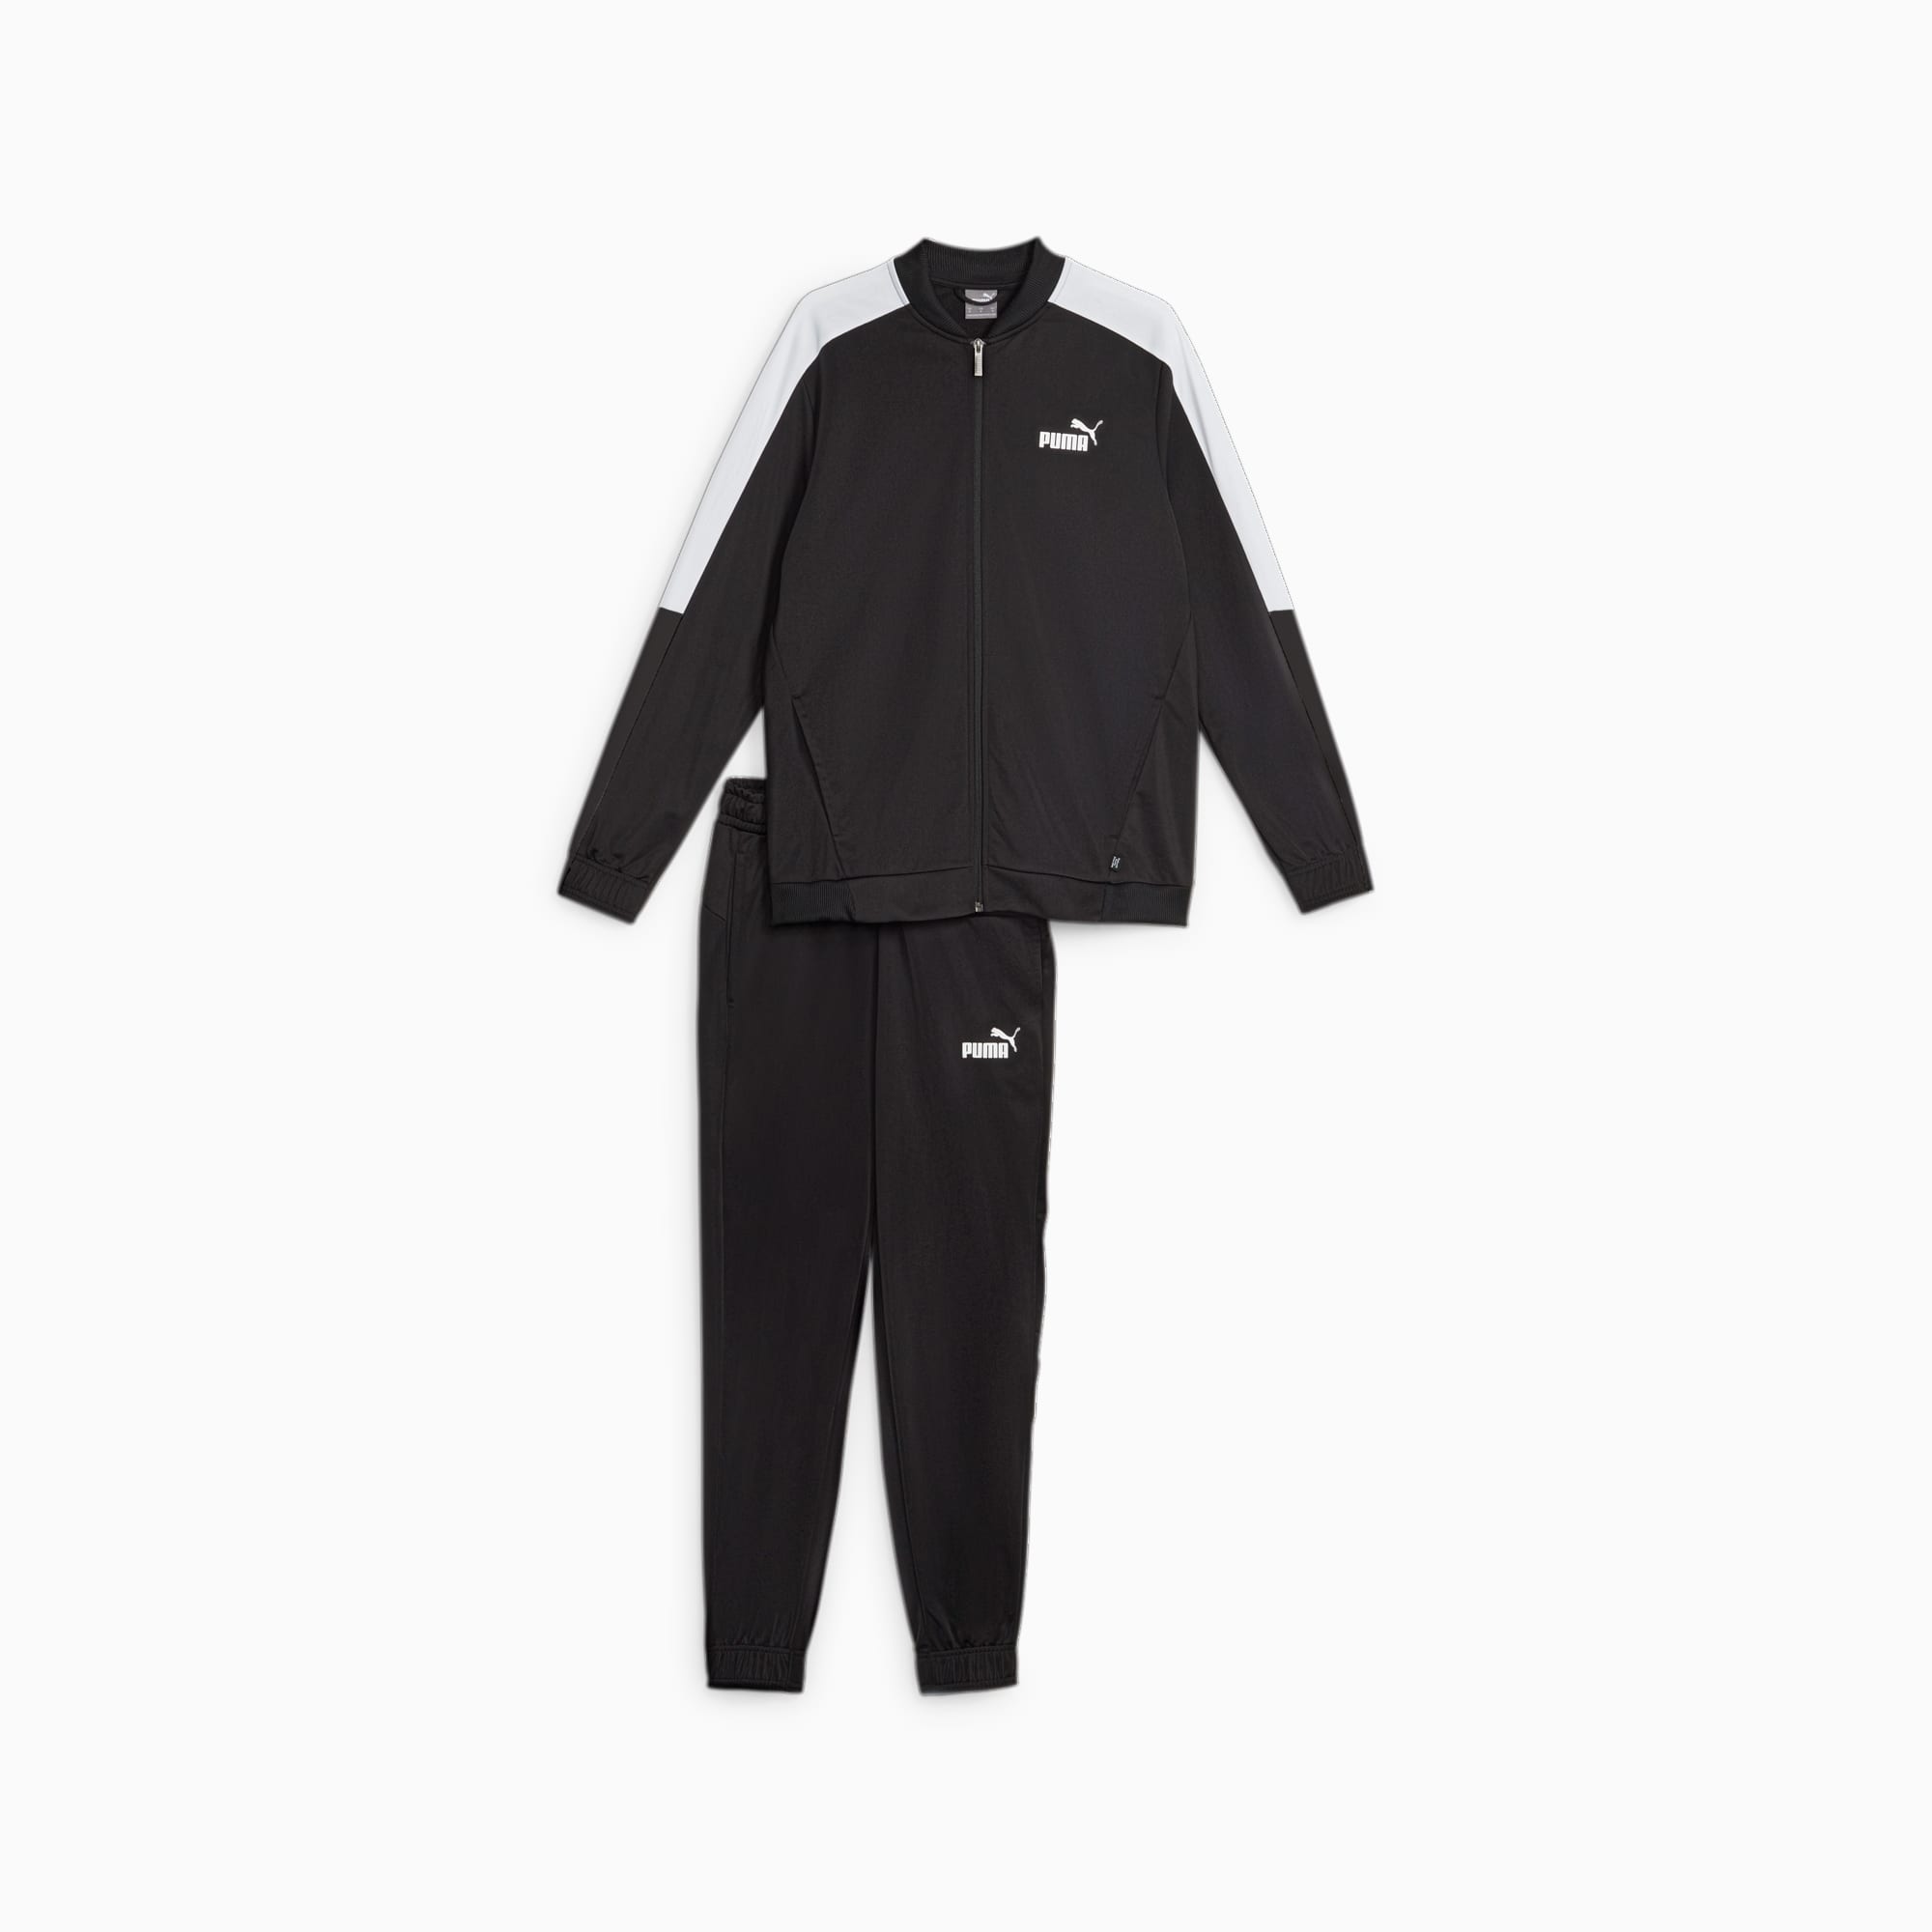 PUMA Men's Baseball Tricot Suit, Black, Size XS